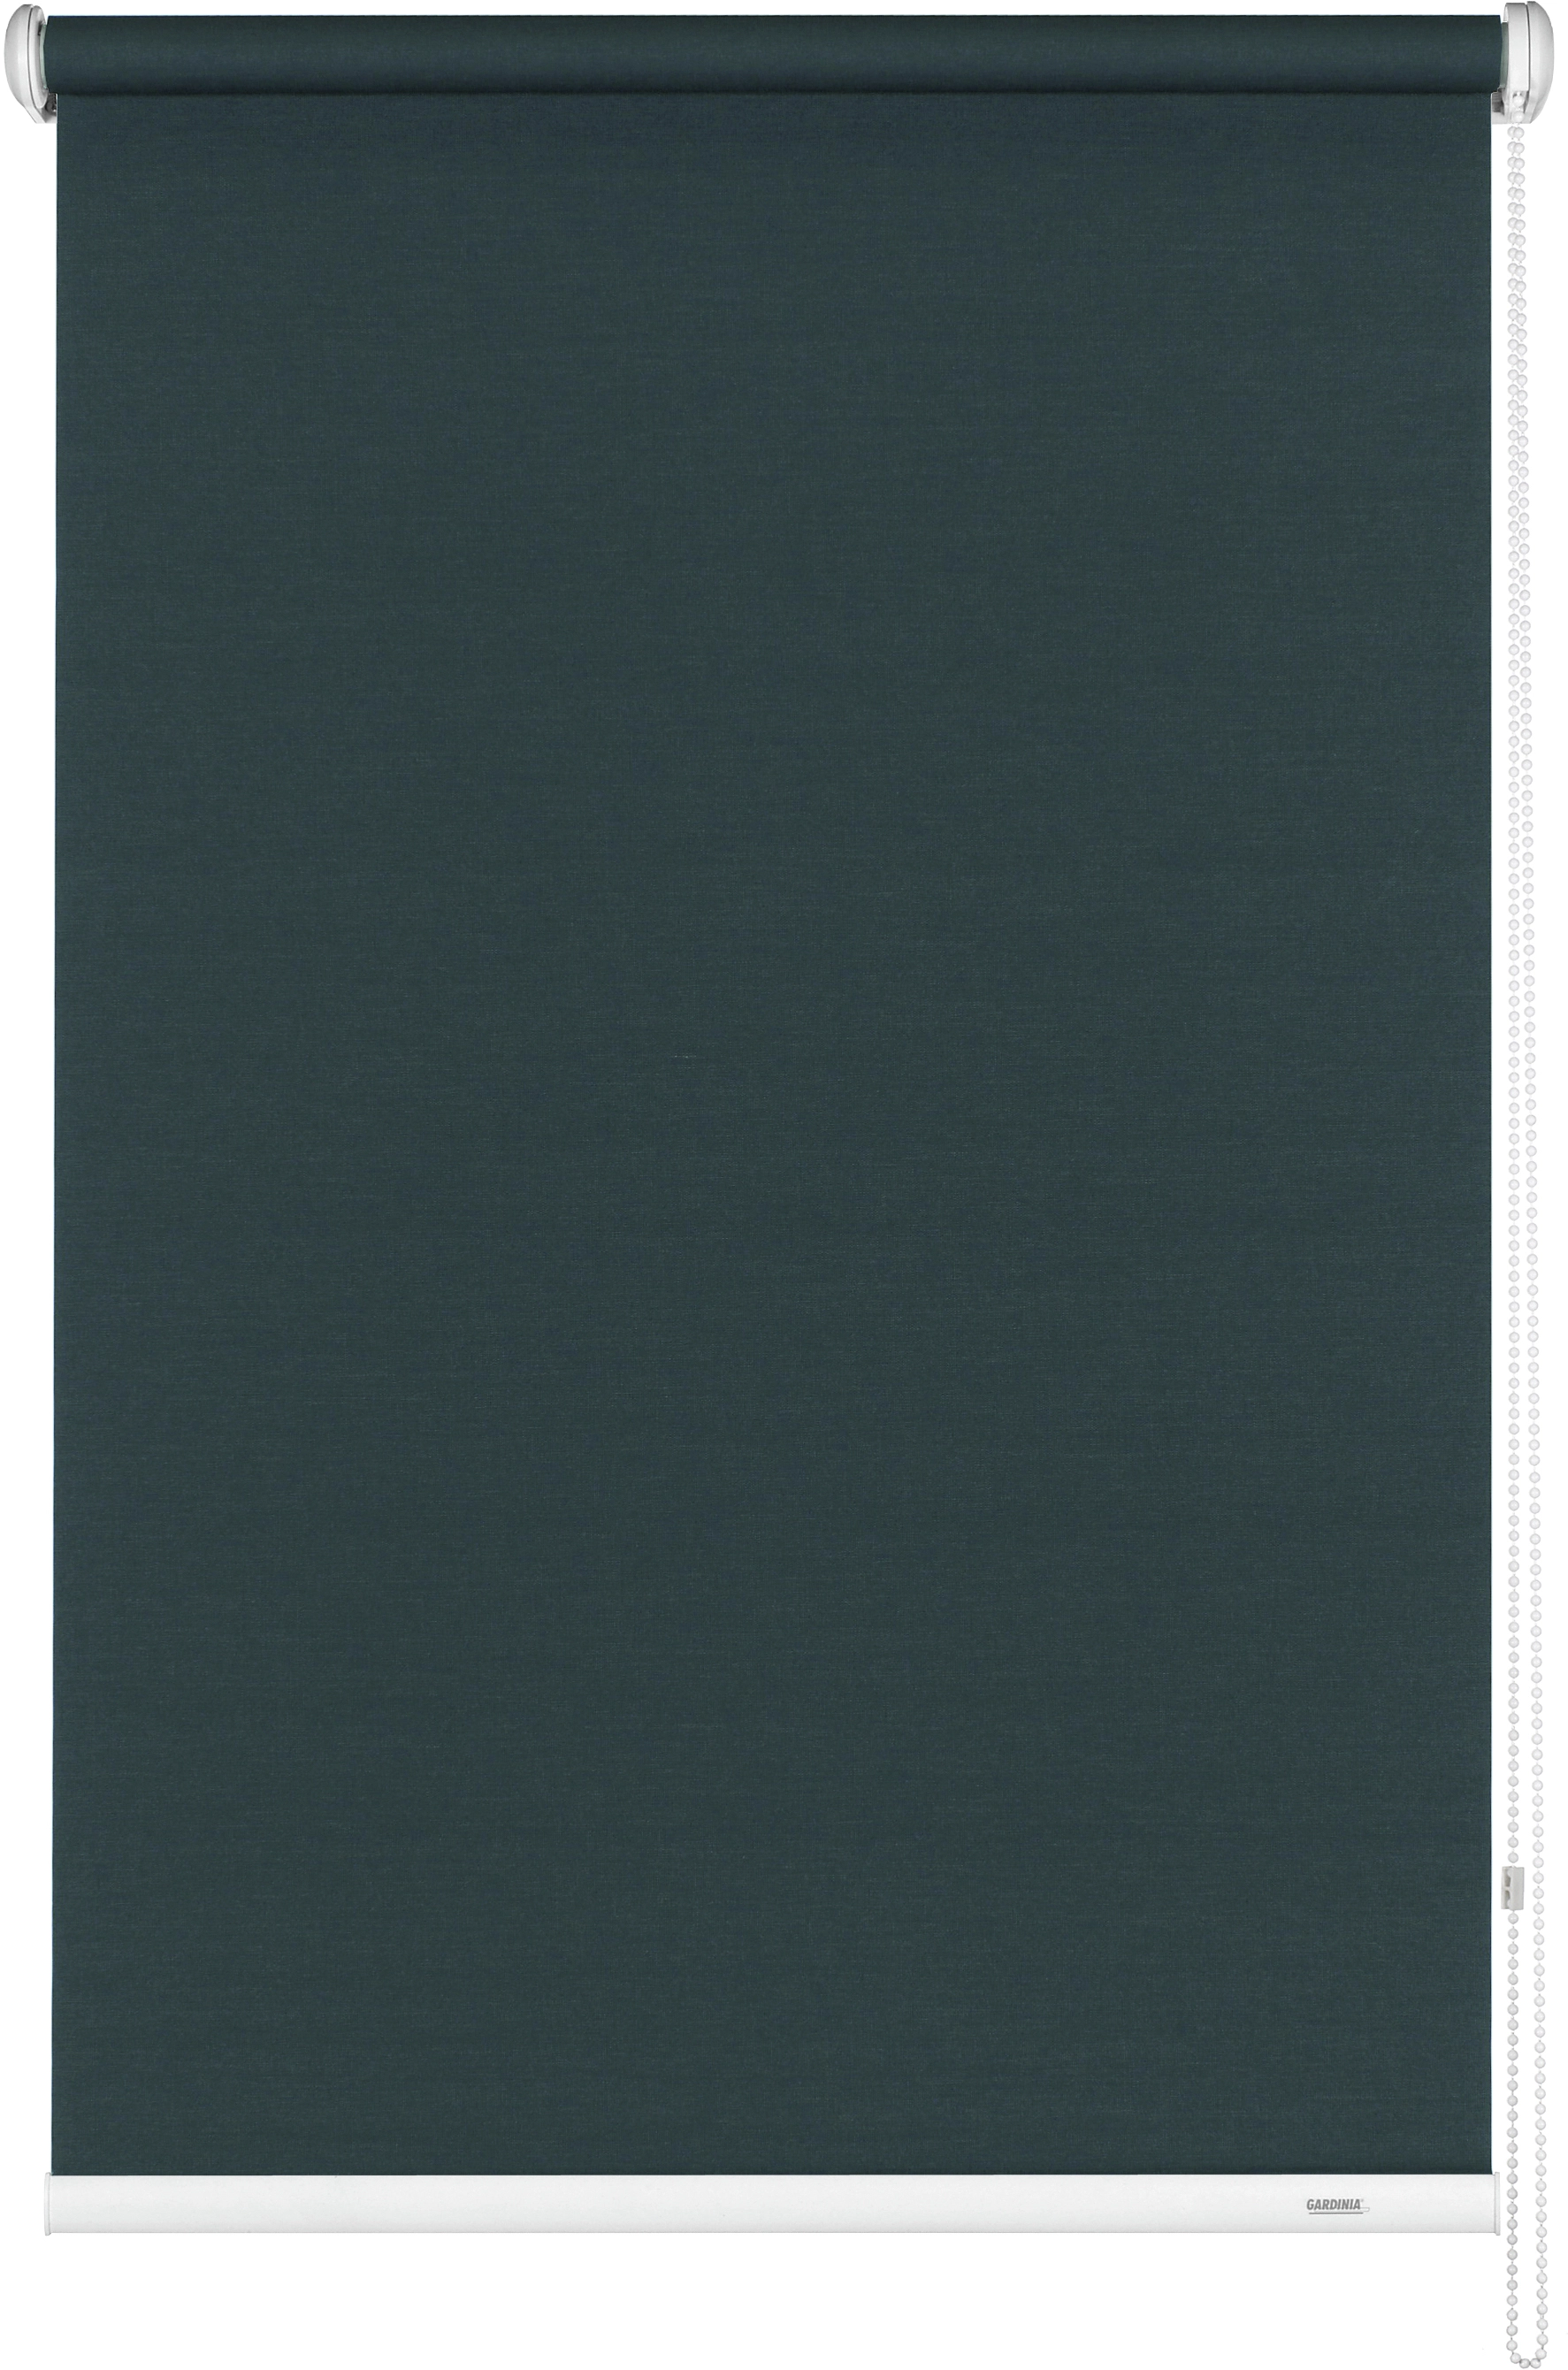 Gardinia Seitenzug-Rollo Abdunklung 82 cm x 180 cm Grau kaufen bei OBI